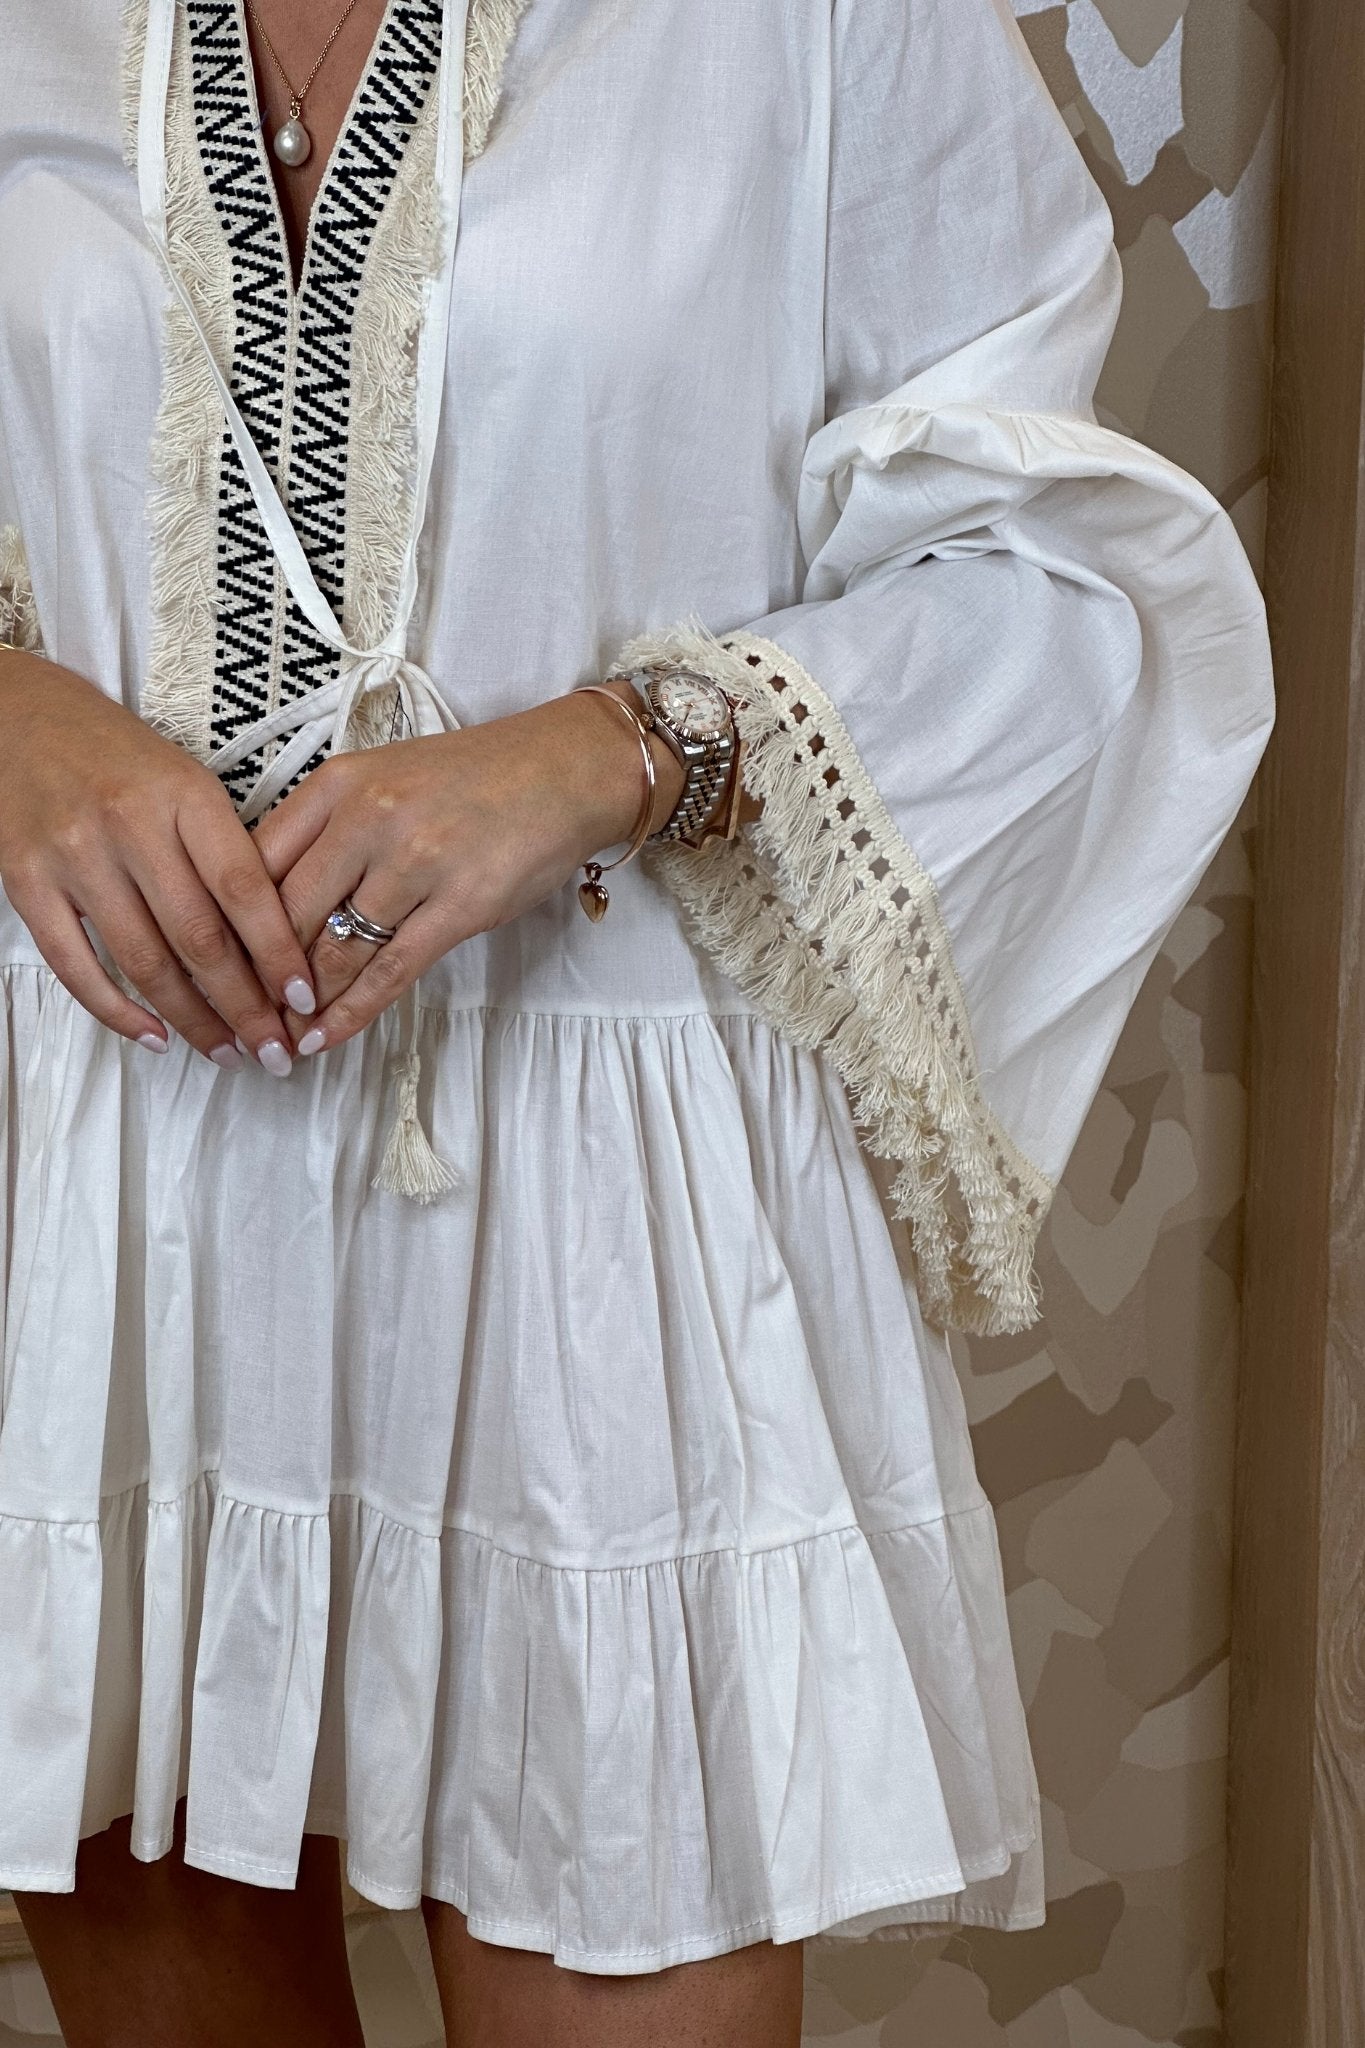 Belle Embroidered Peplum Dress In White - The Walk in Wardrobe